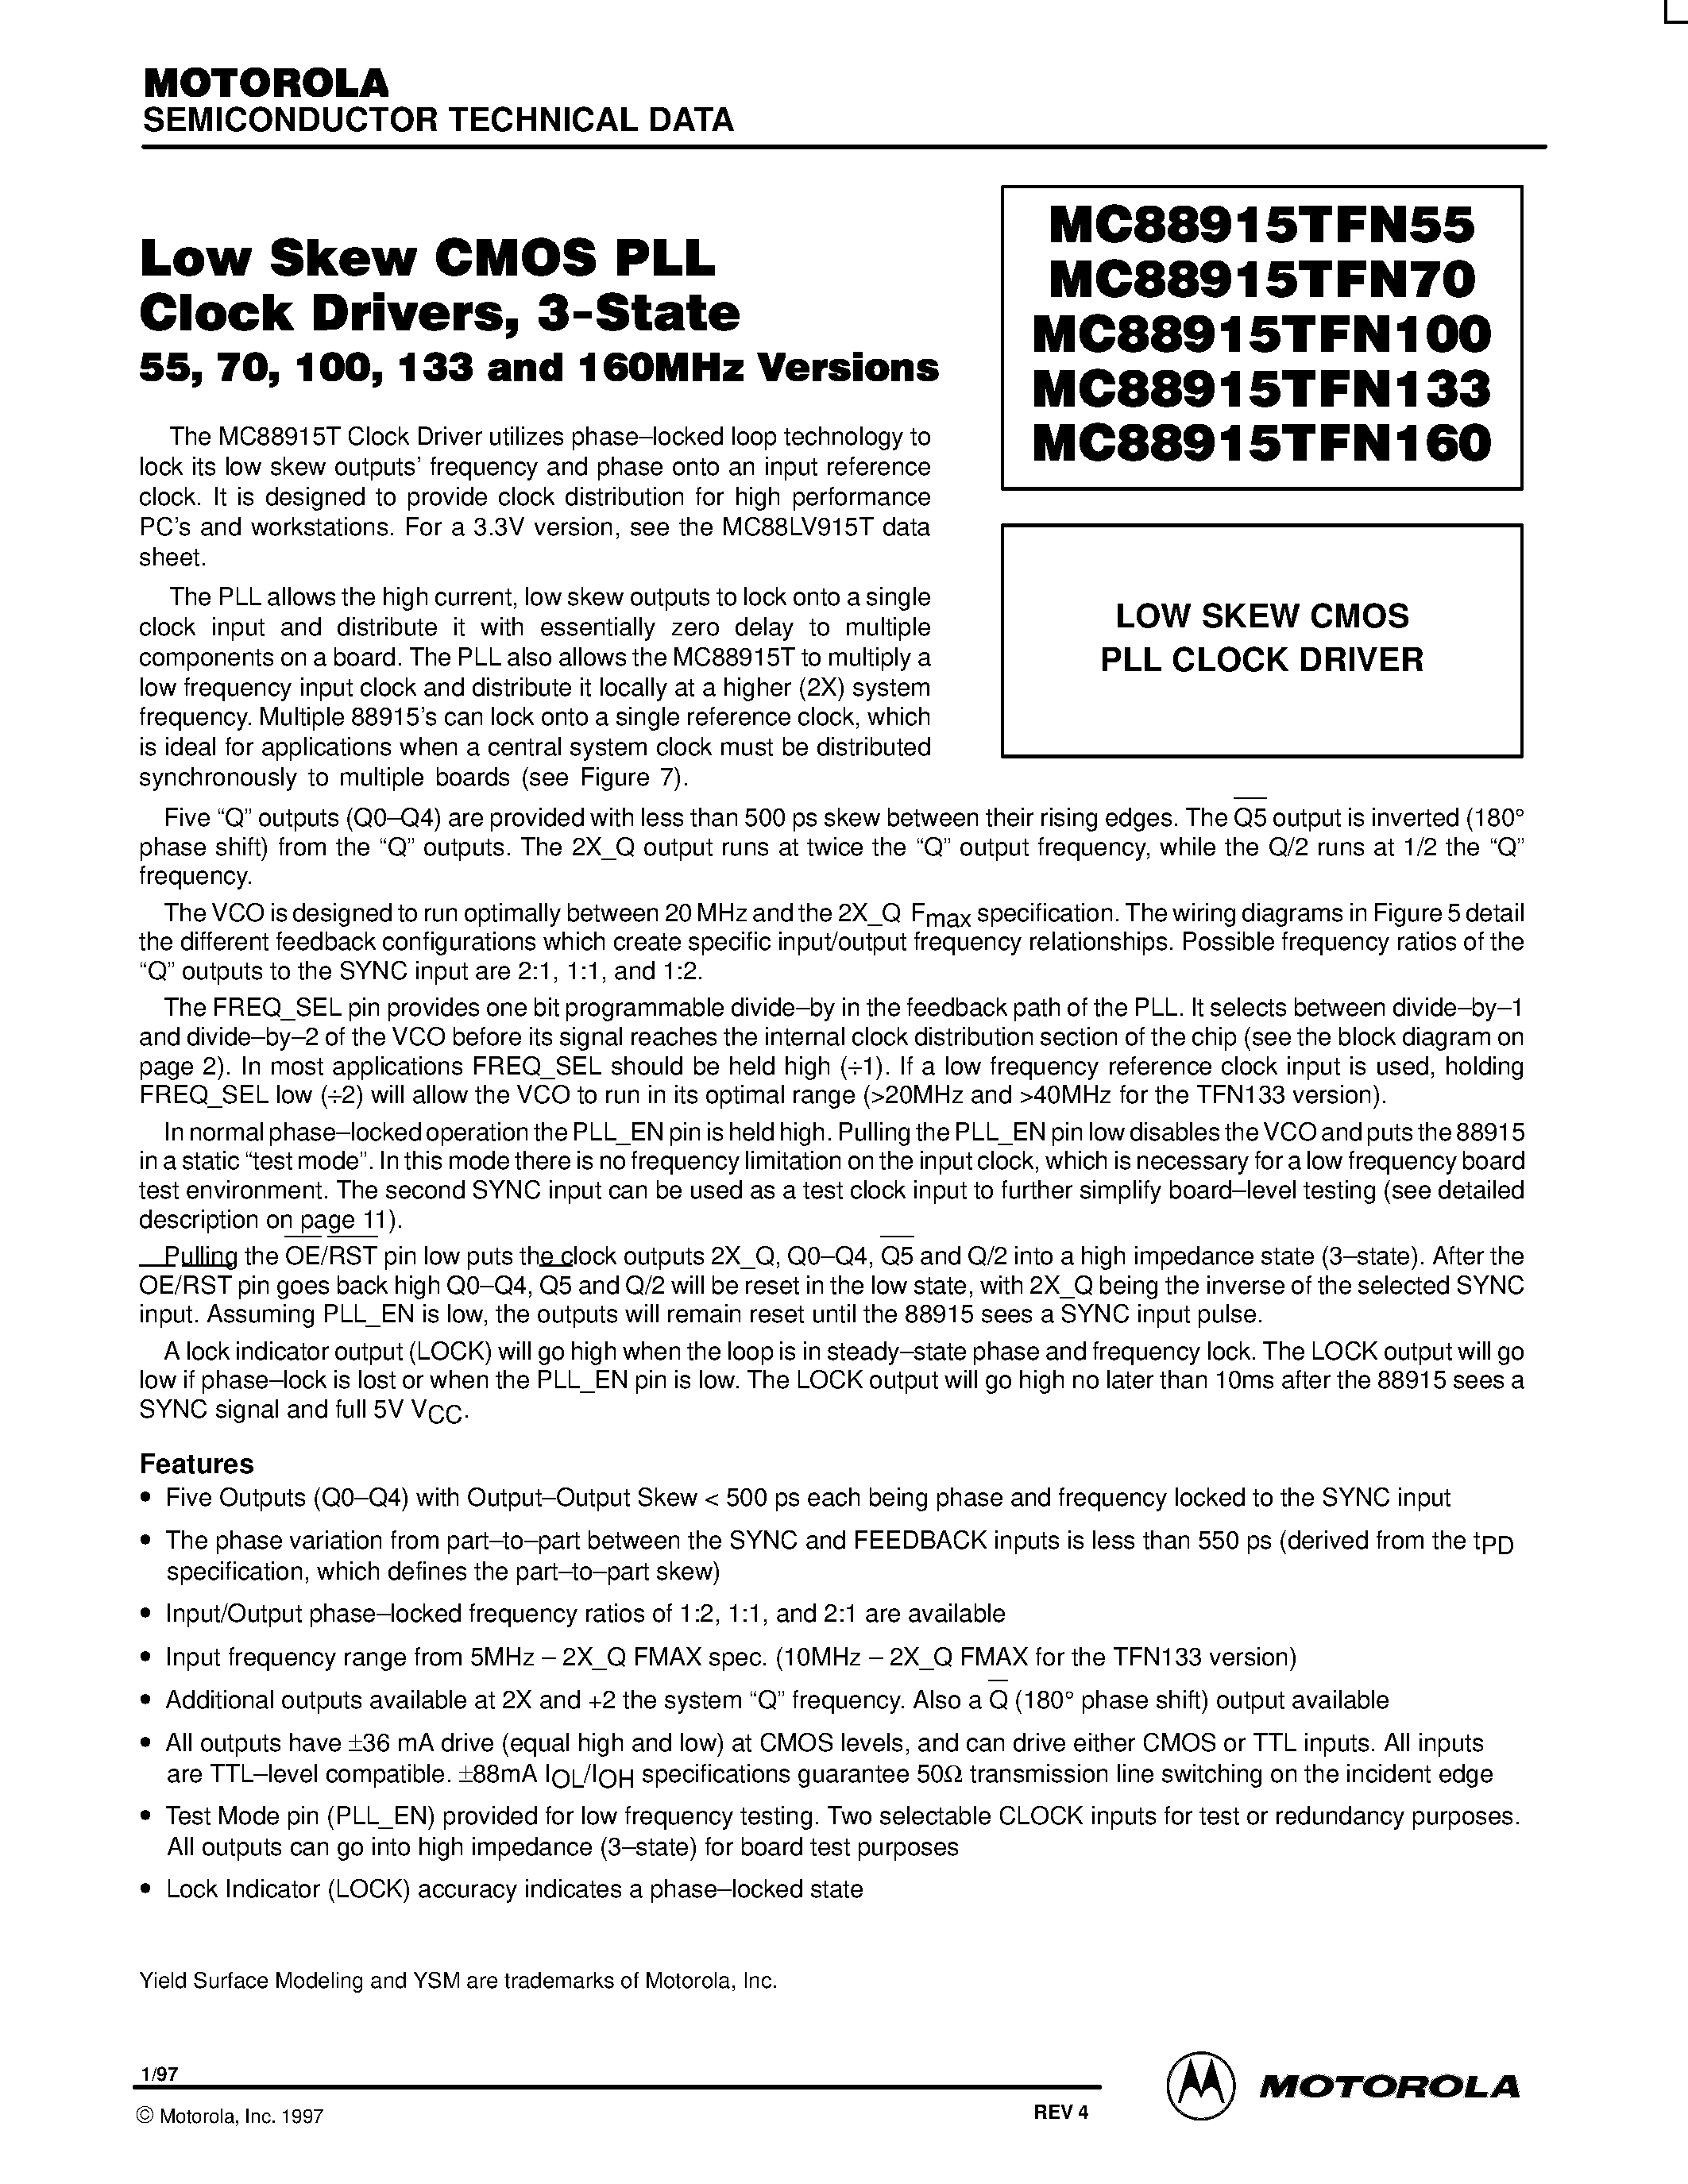 Datasheet MC88915TFN133 - LOW SKEW CMOS PLL CLOCK DRIVER page 1